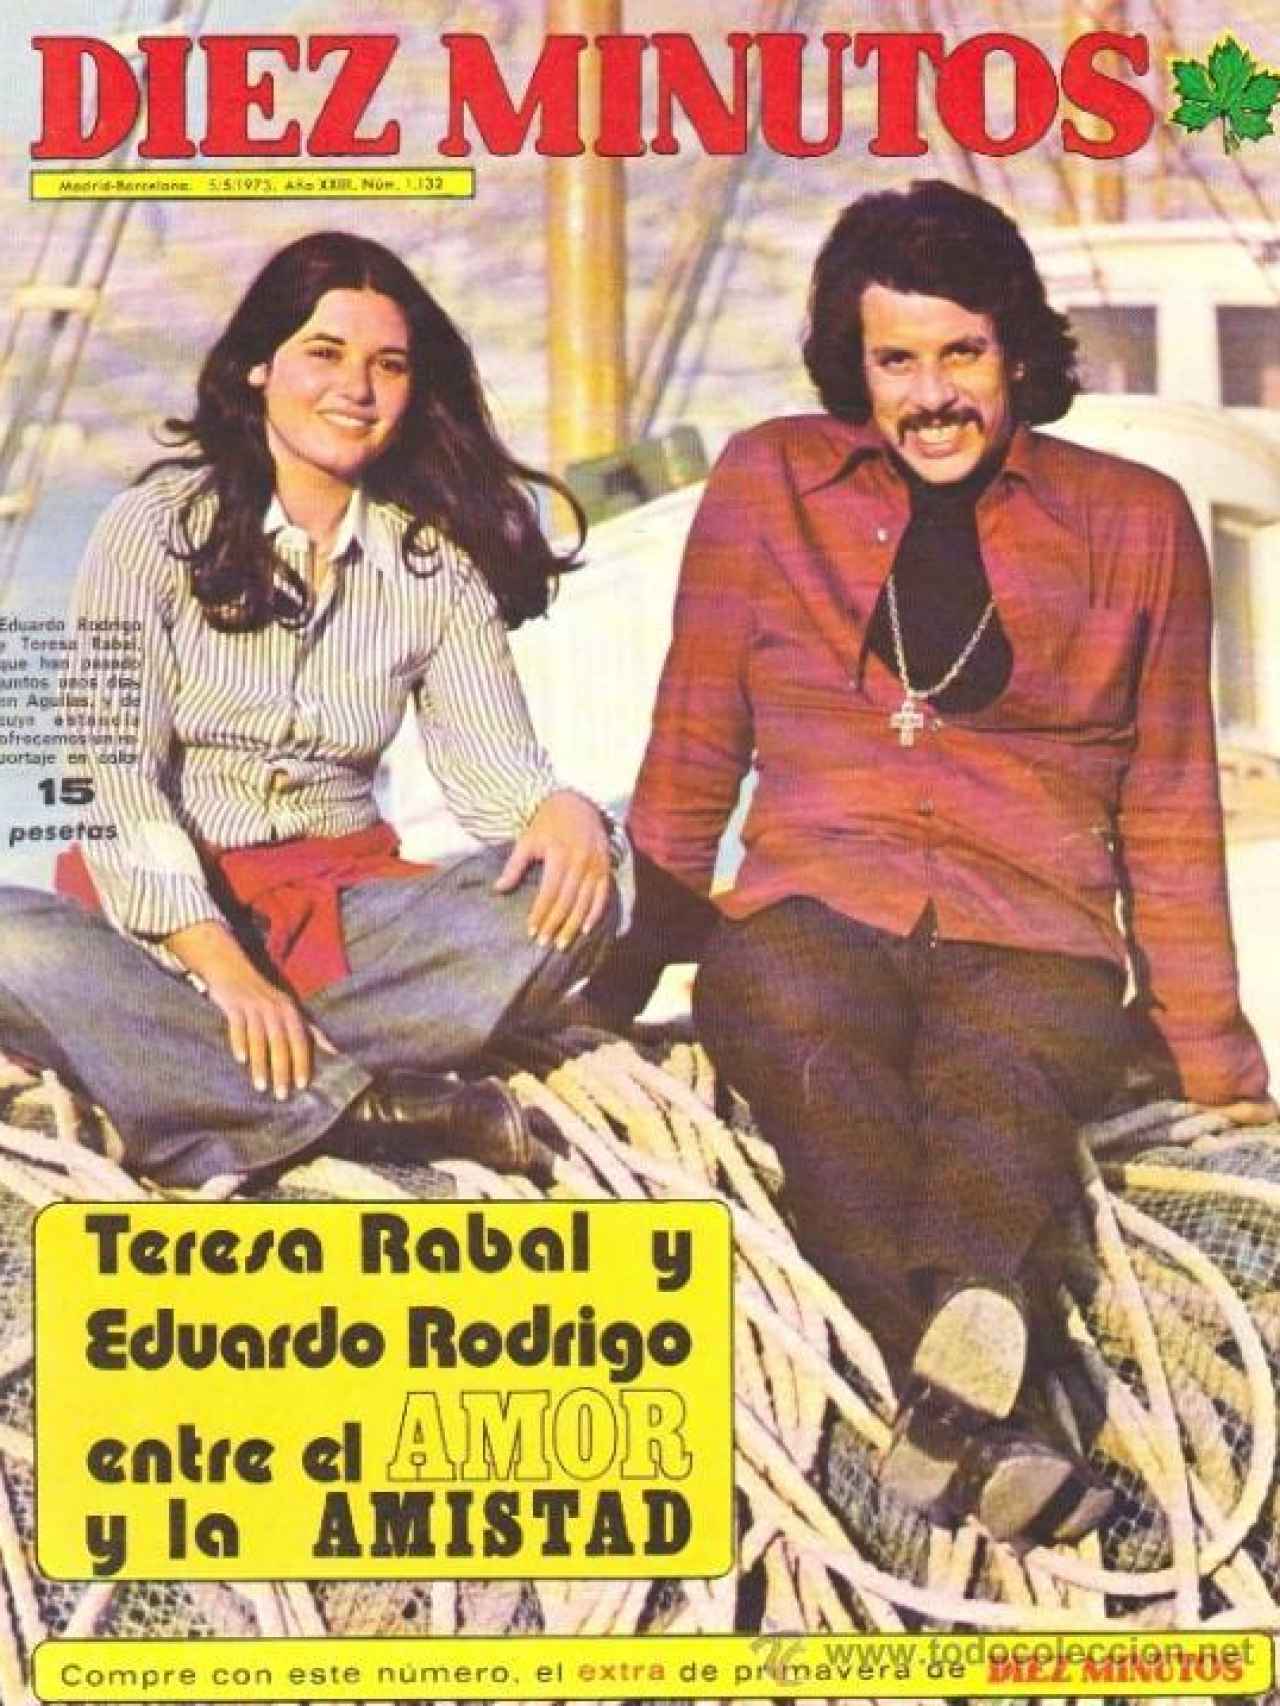 Teresa Rabal y Eduardo Rodrigo en una portada de Diez Minutos.